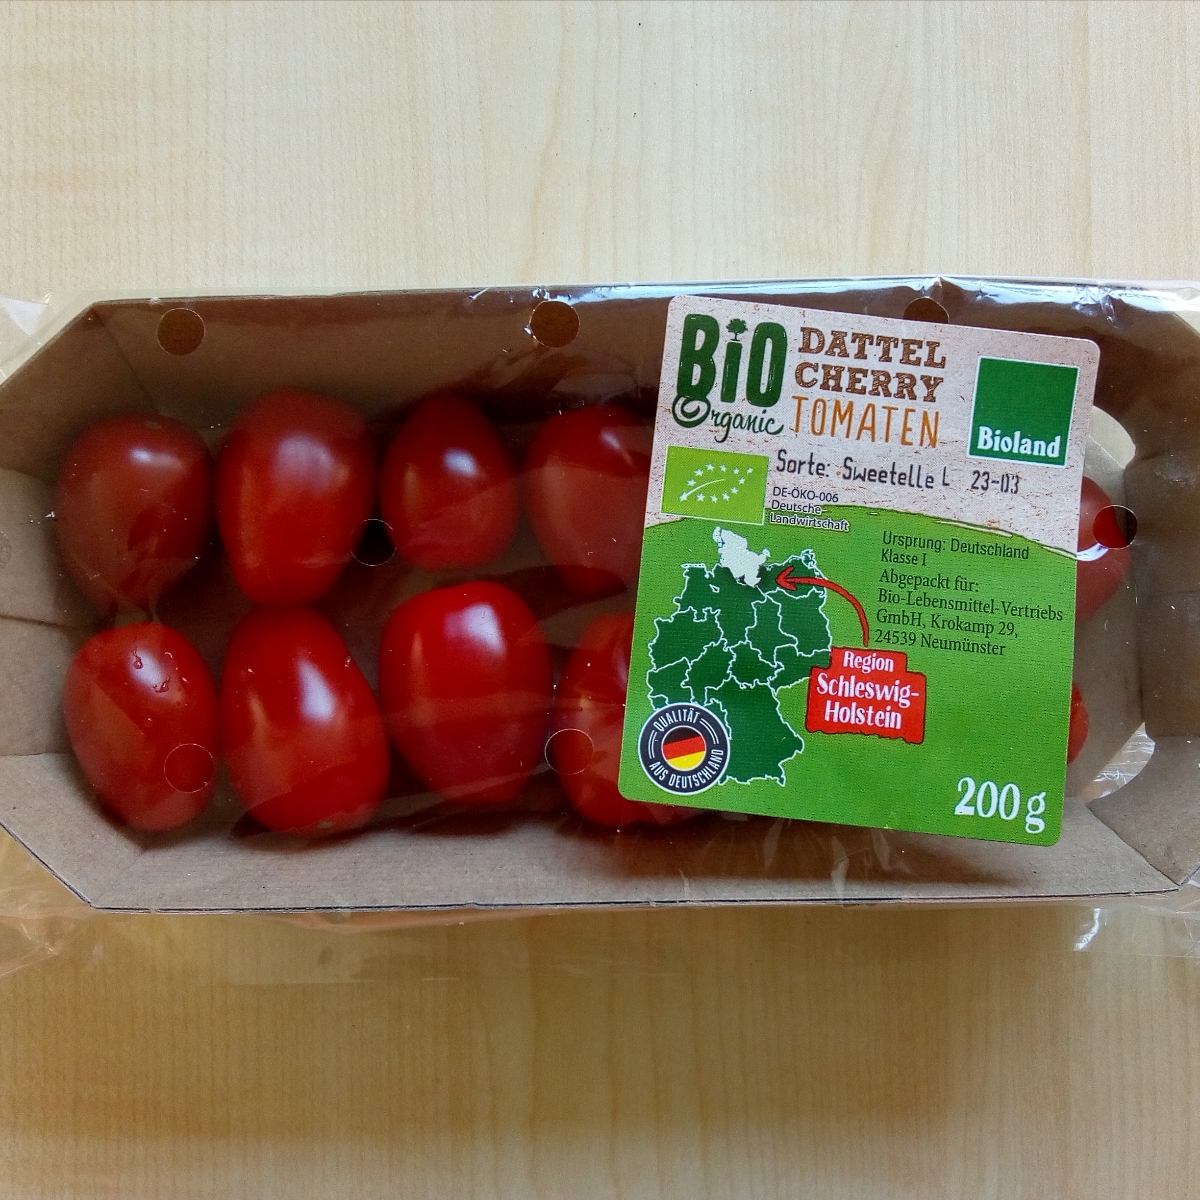 Bio-organic Dattel Cherry Tomaten Reviews | abillion